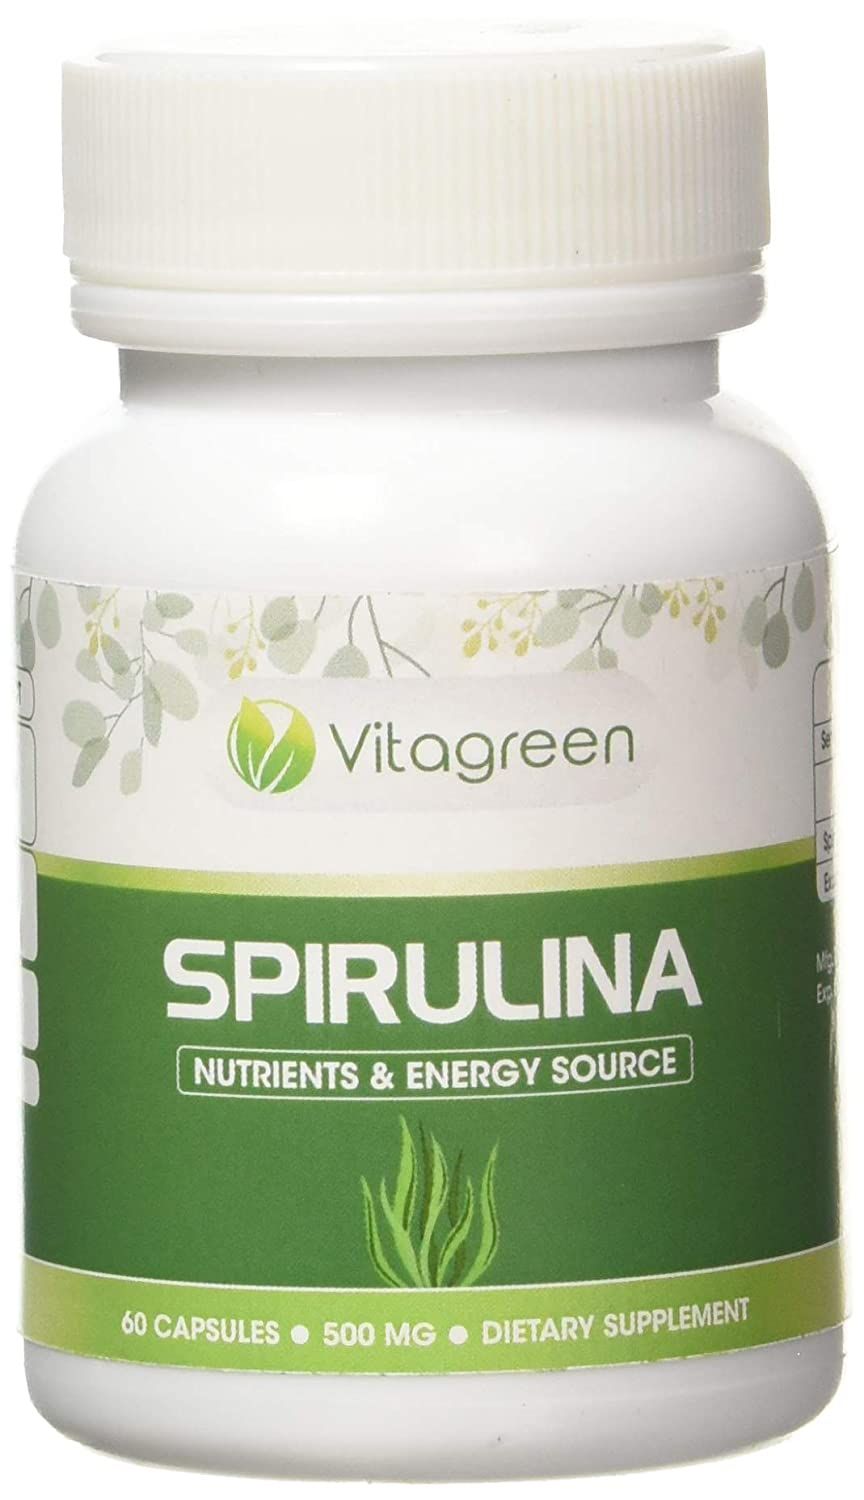 VitaGreen Spirulina Nutrients & Energy Source Image